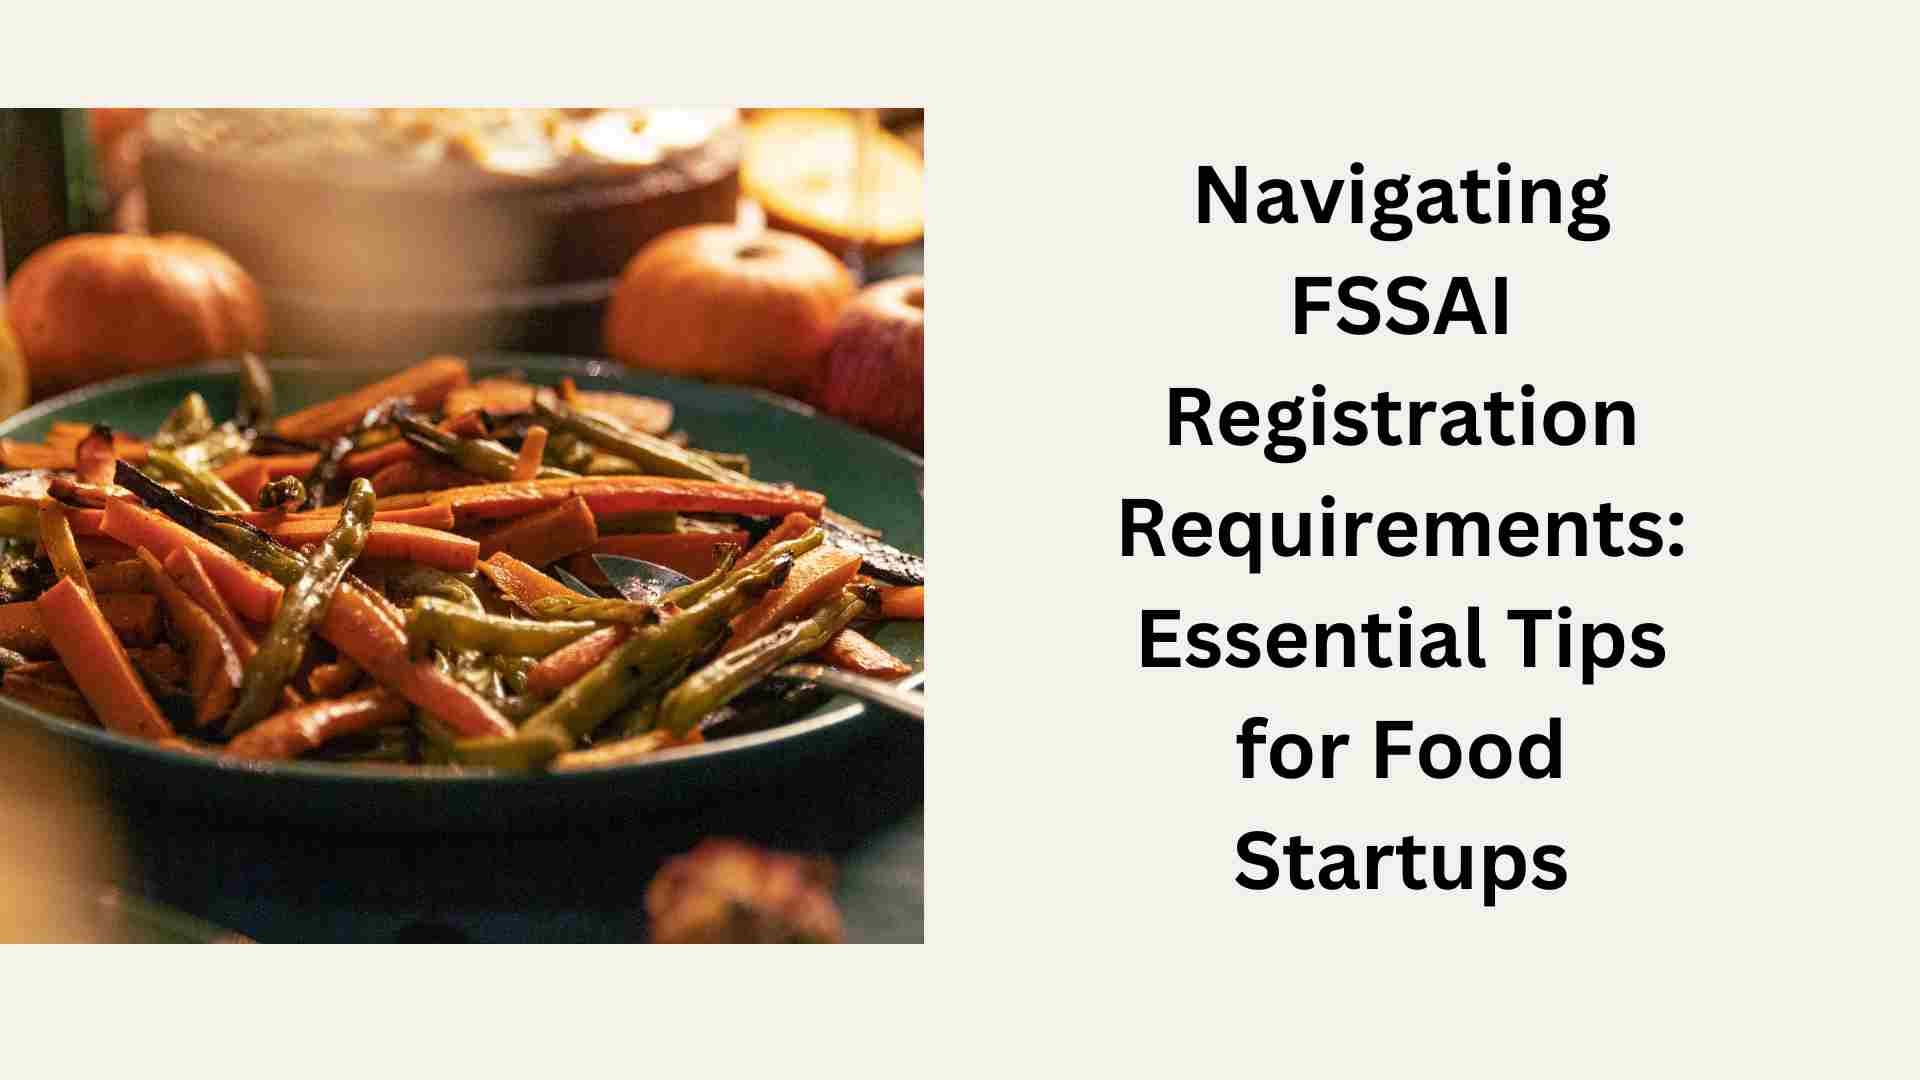 Navigating FSSAI Registration Requirements Essential Tips for Food Startups